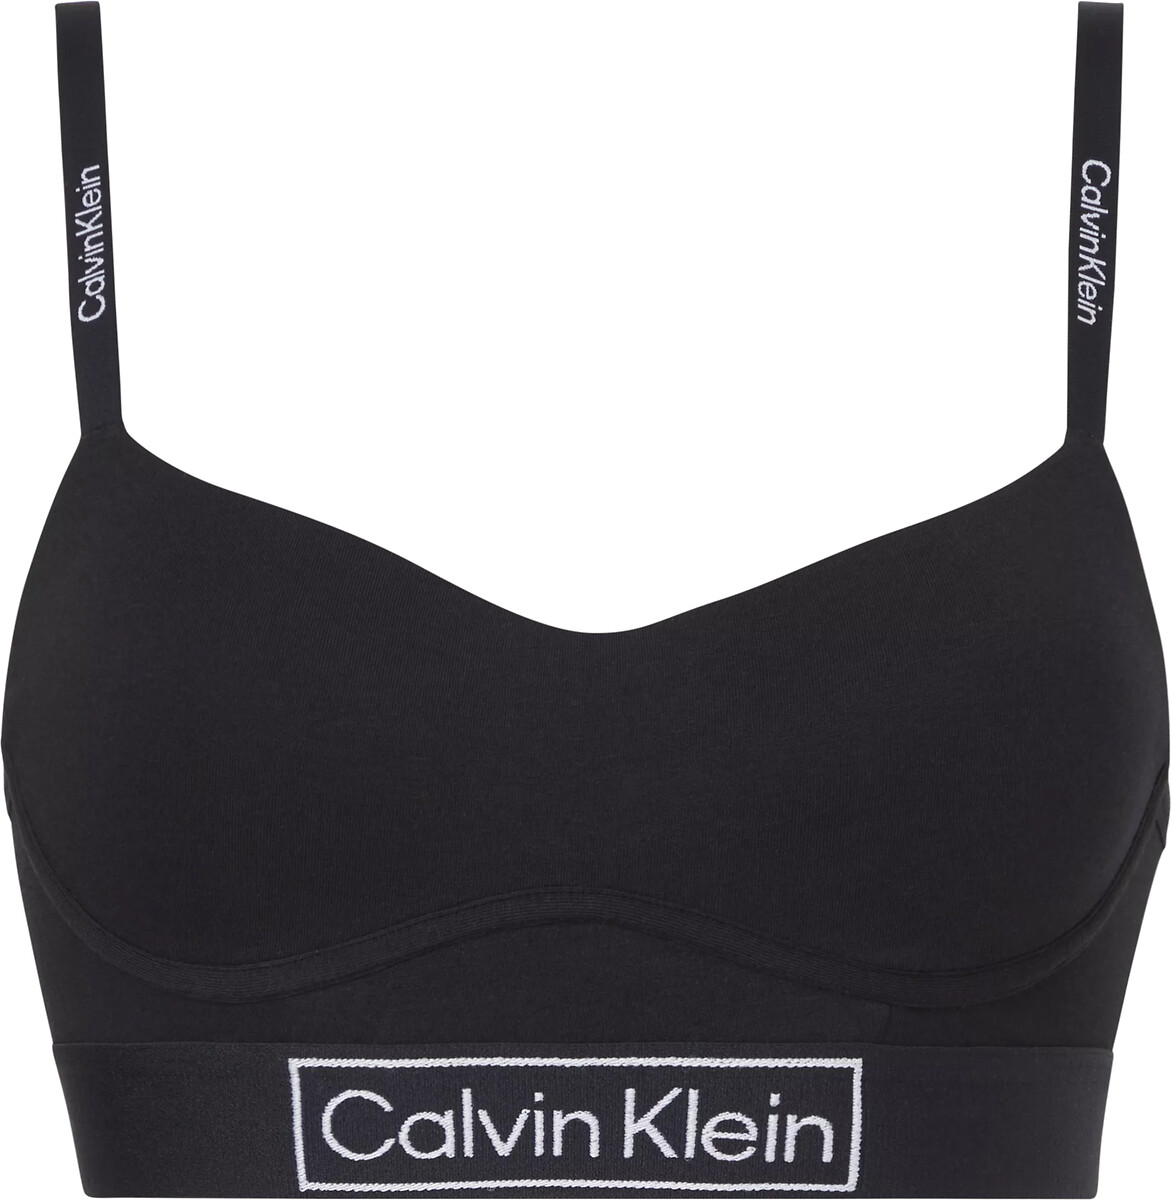 Calvin Klein Sheer Marquisette Lace Triangle Black Bra